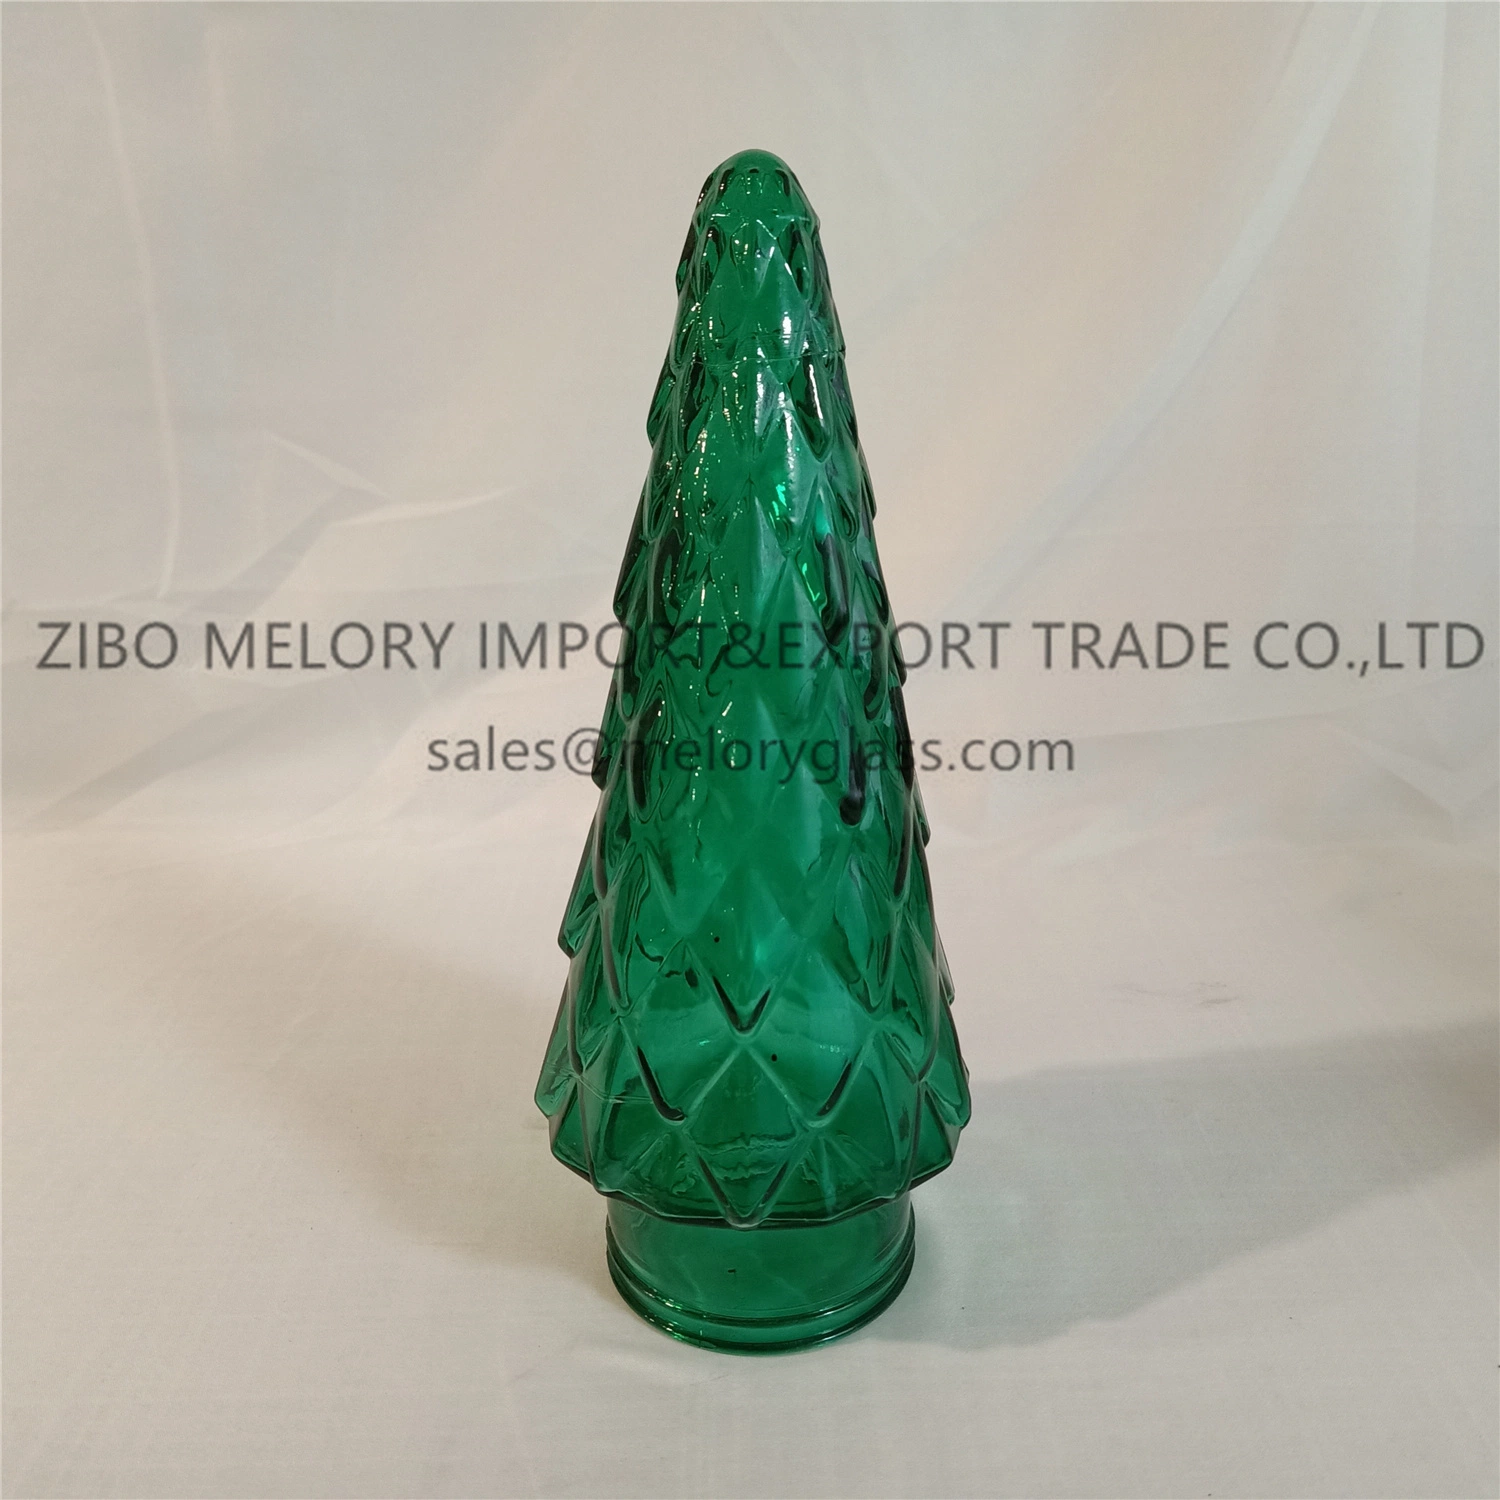 Dark Green Crystal Glass Ornament Shaped Like a Christmas Tree